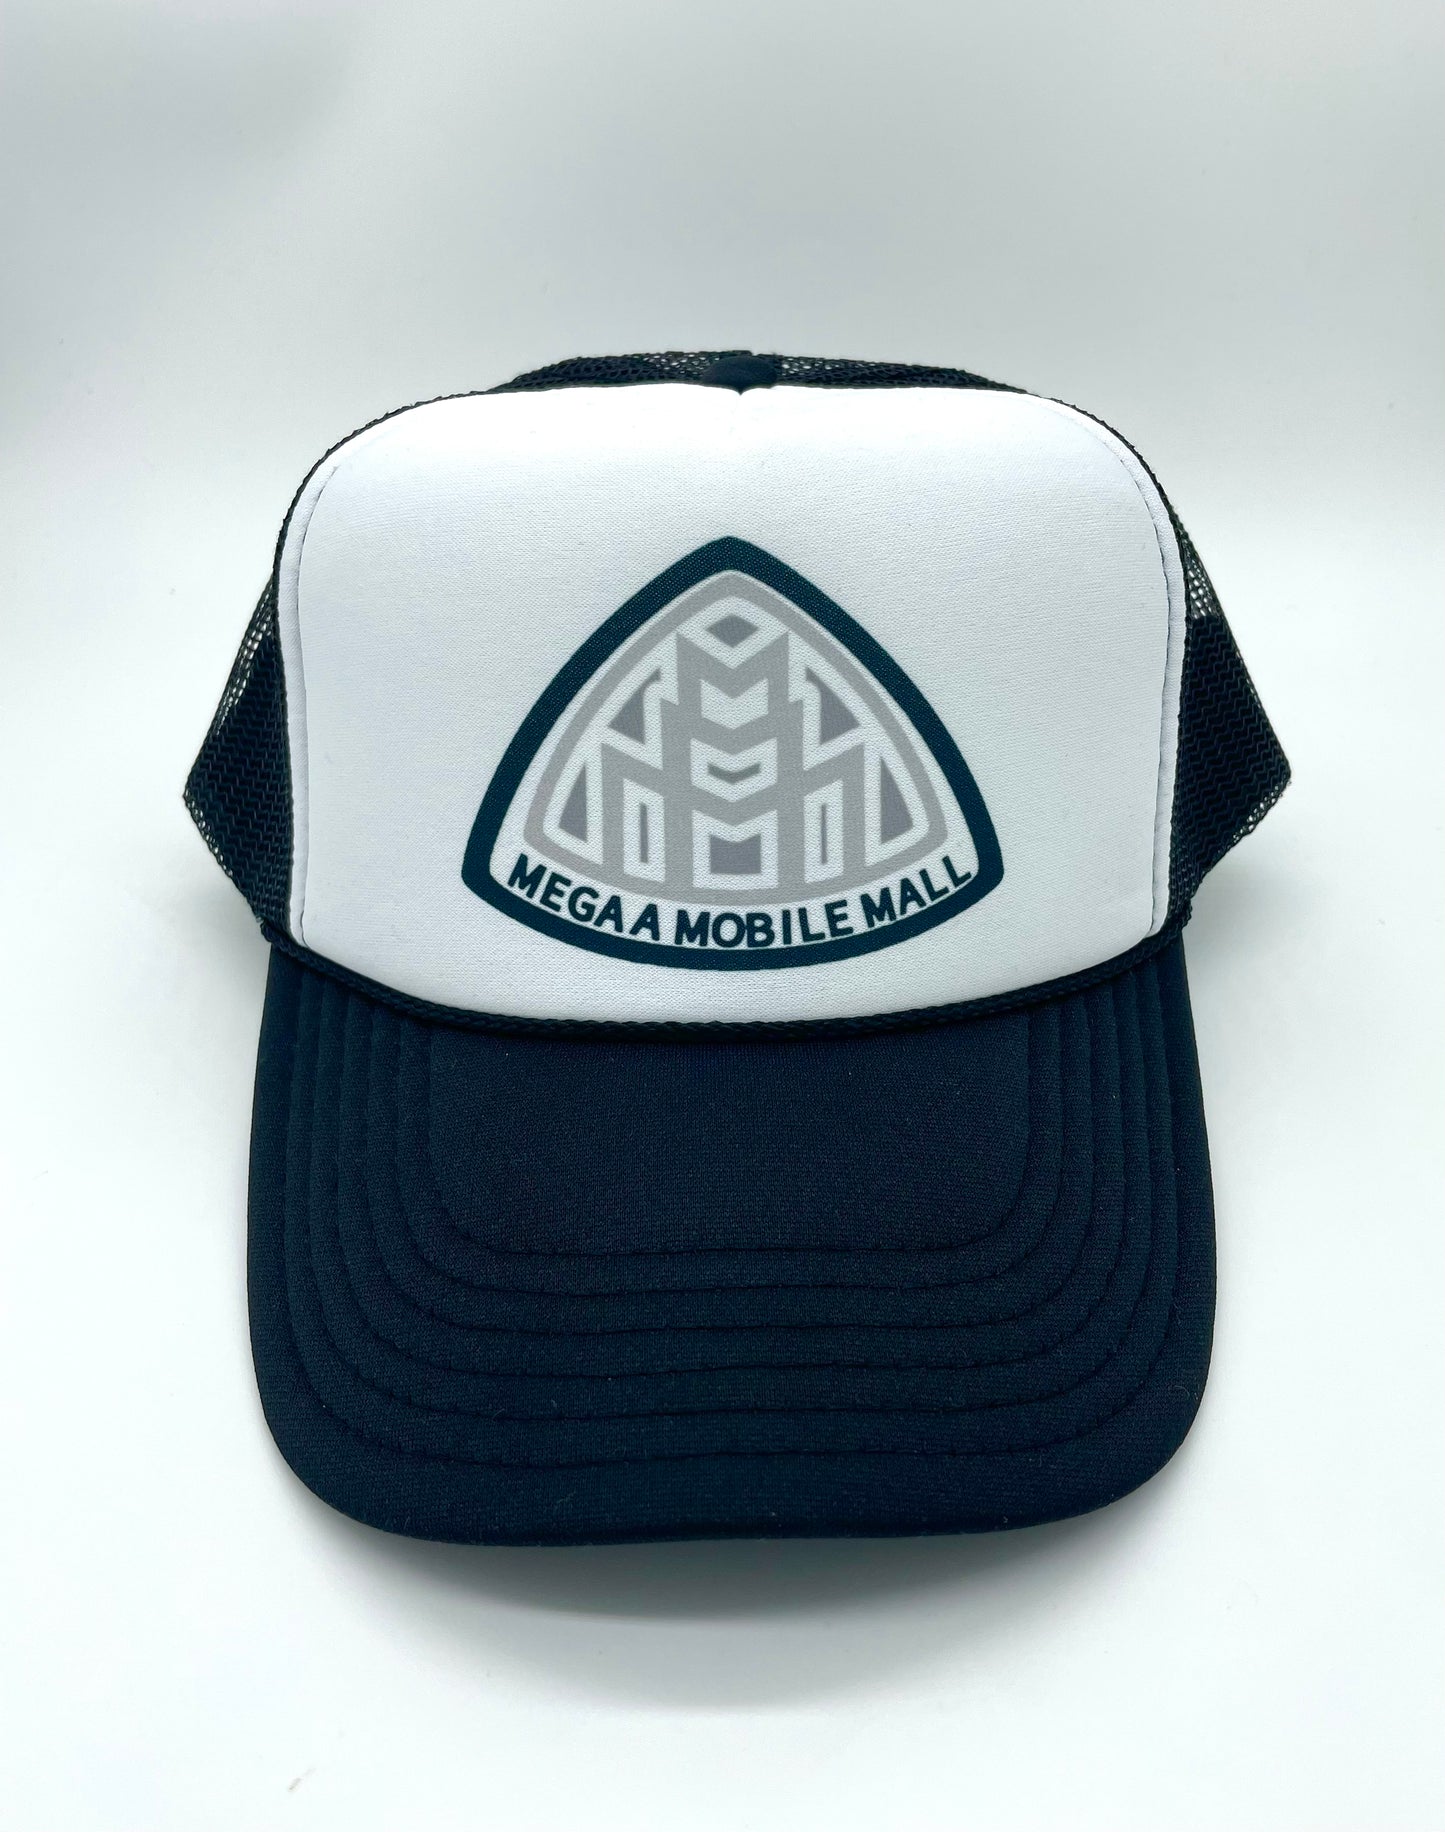 MegaaMobileMall Black Trucker Hat